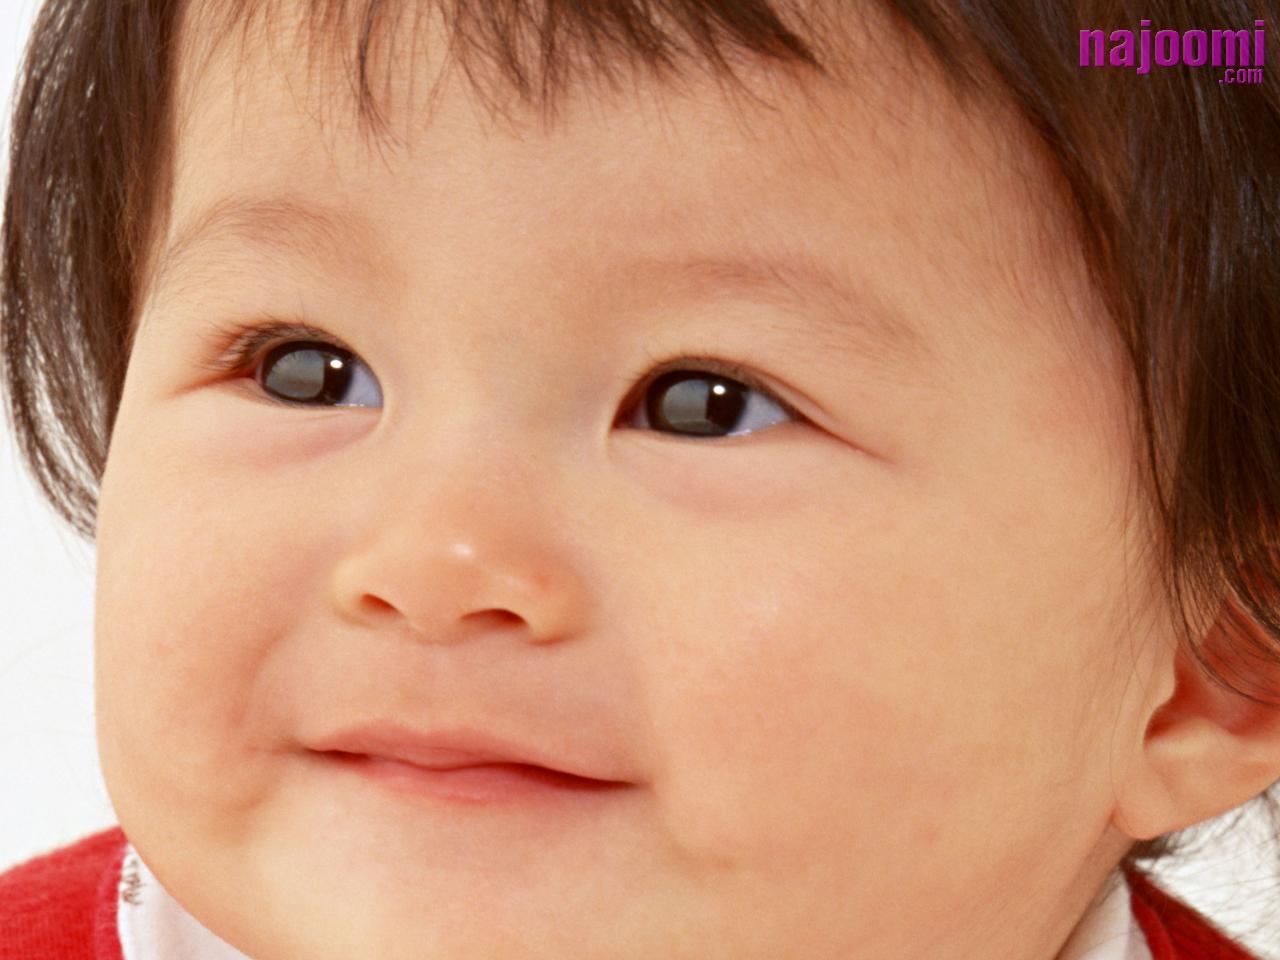 Cute Babies Wallpapers Free Download - Cute Babies On Japan - HD Wallpaper 